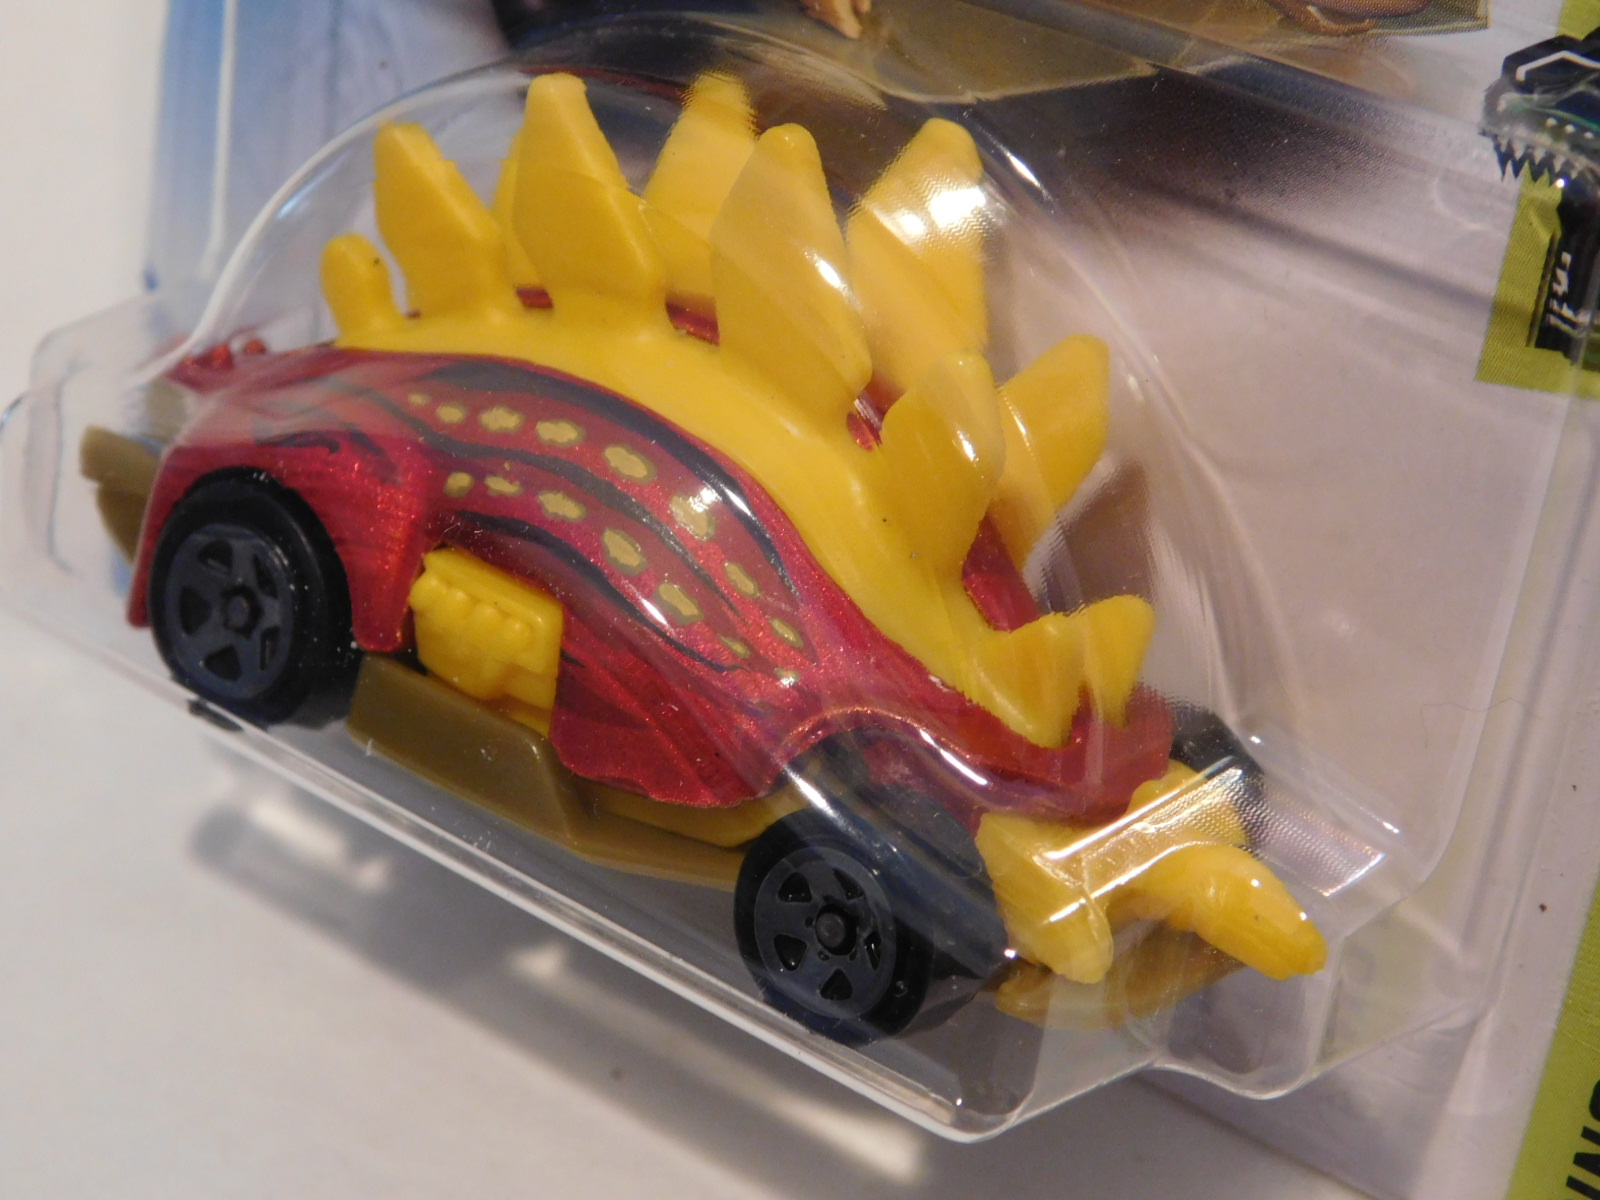 Hot Wheels Dino Riders (Color & Design May Vary) - kidzkorner